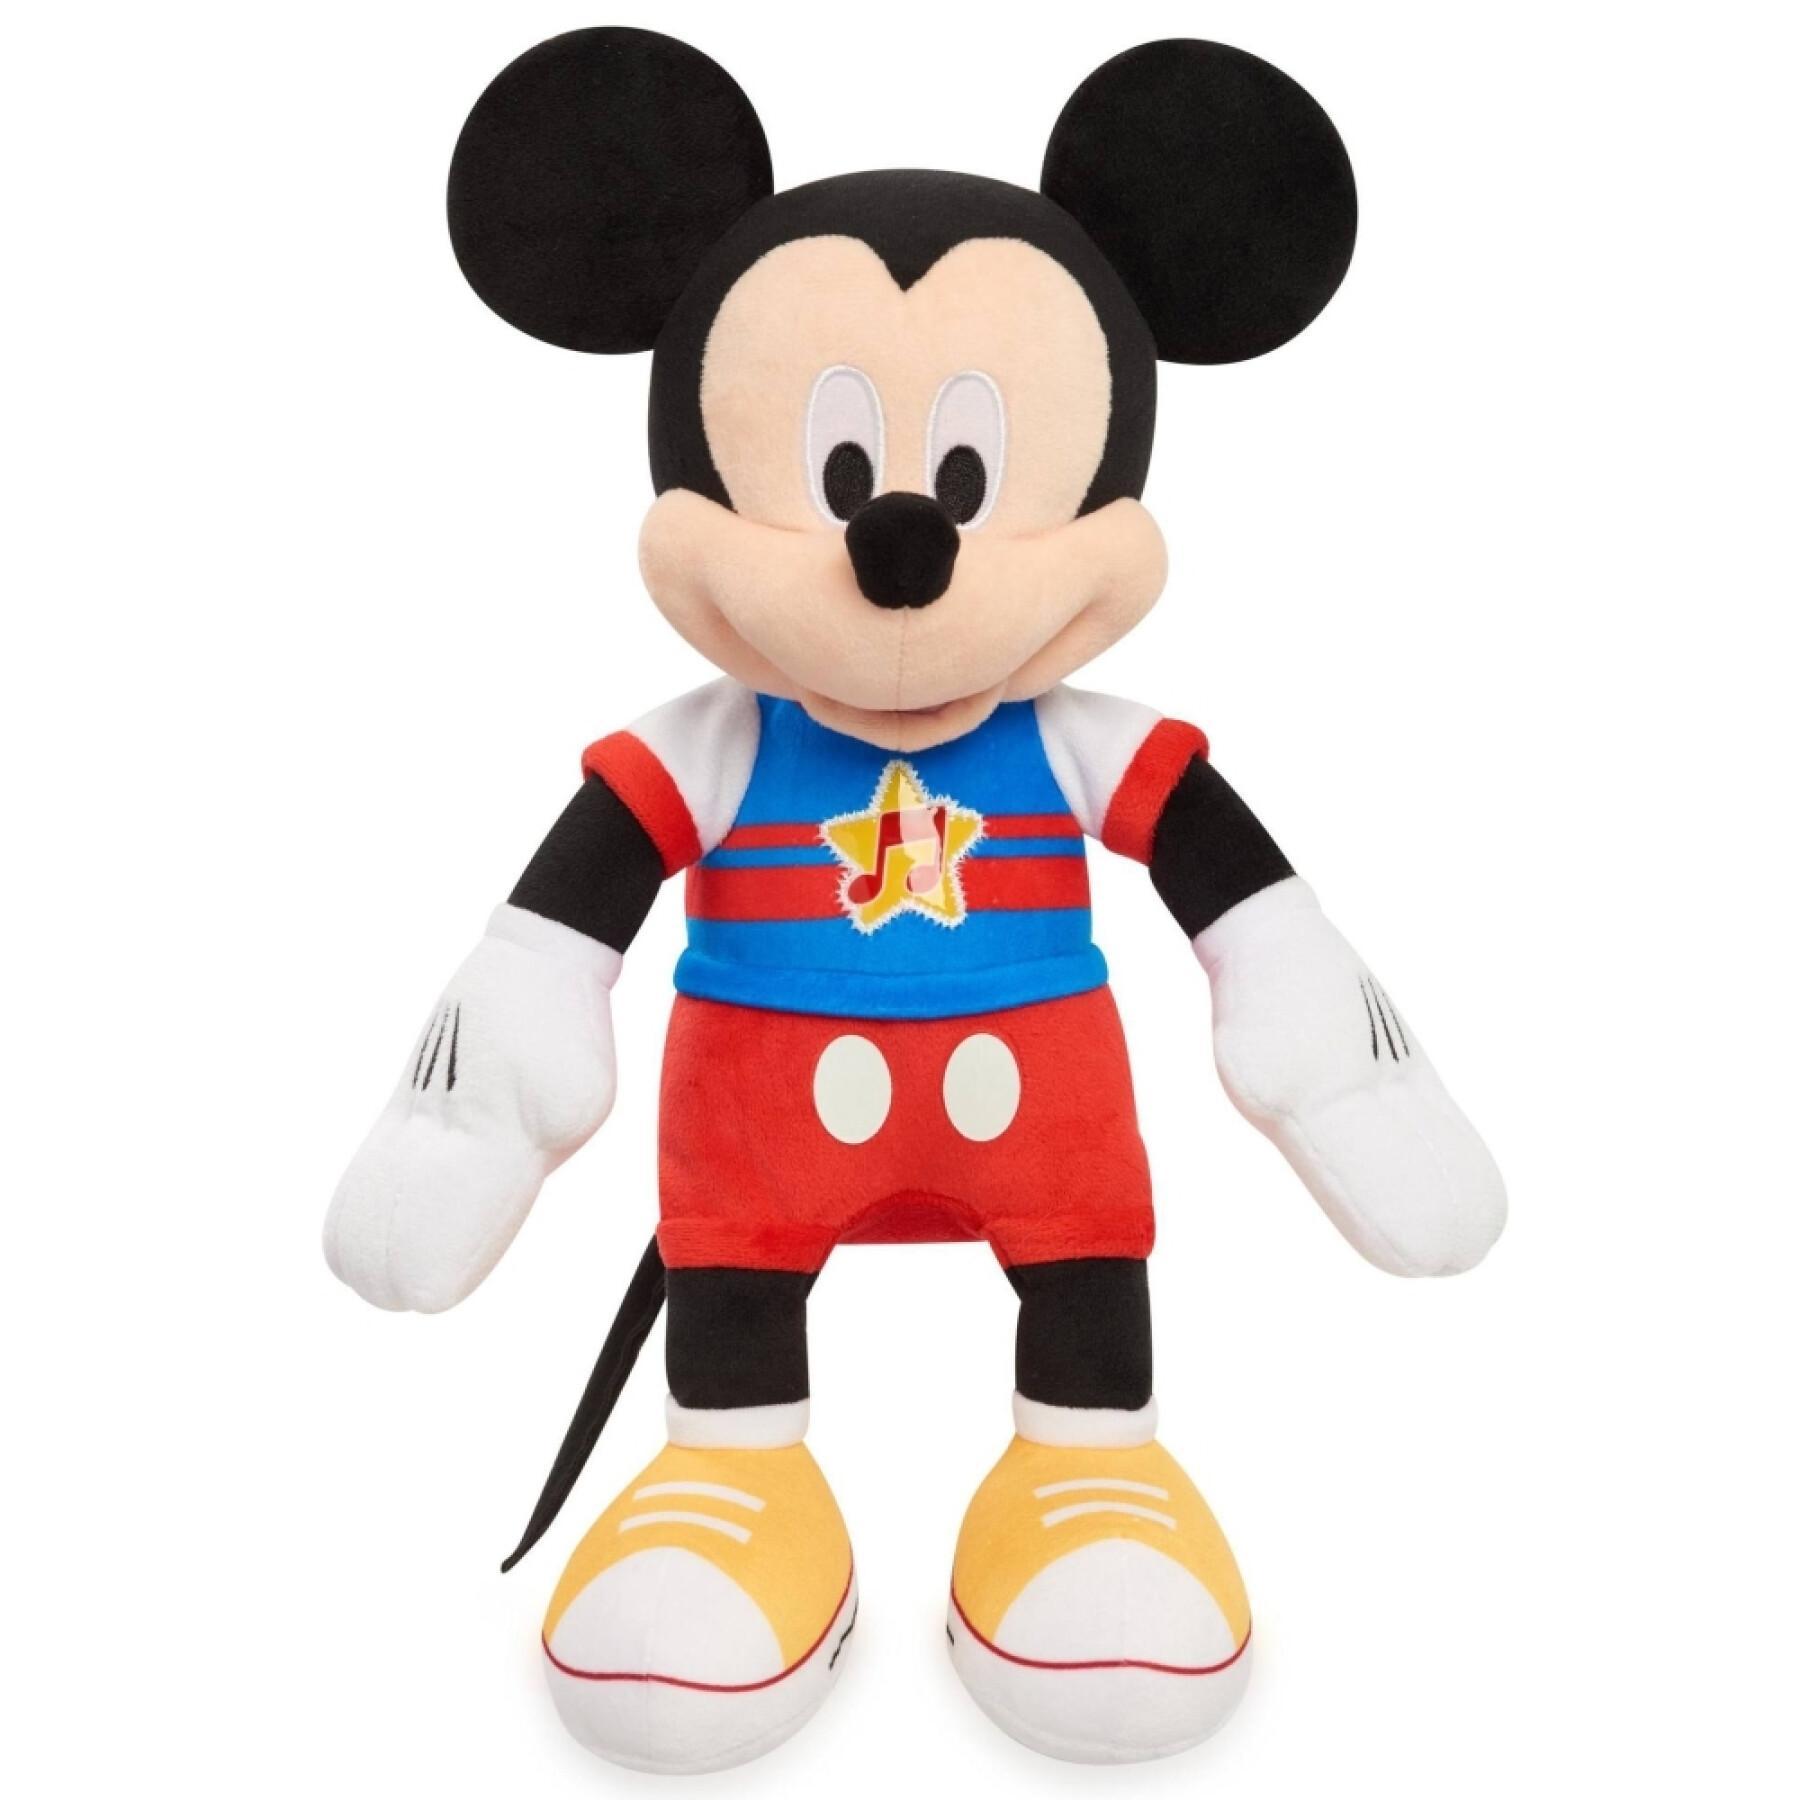 Musical plush Disney Mickey